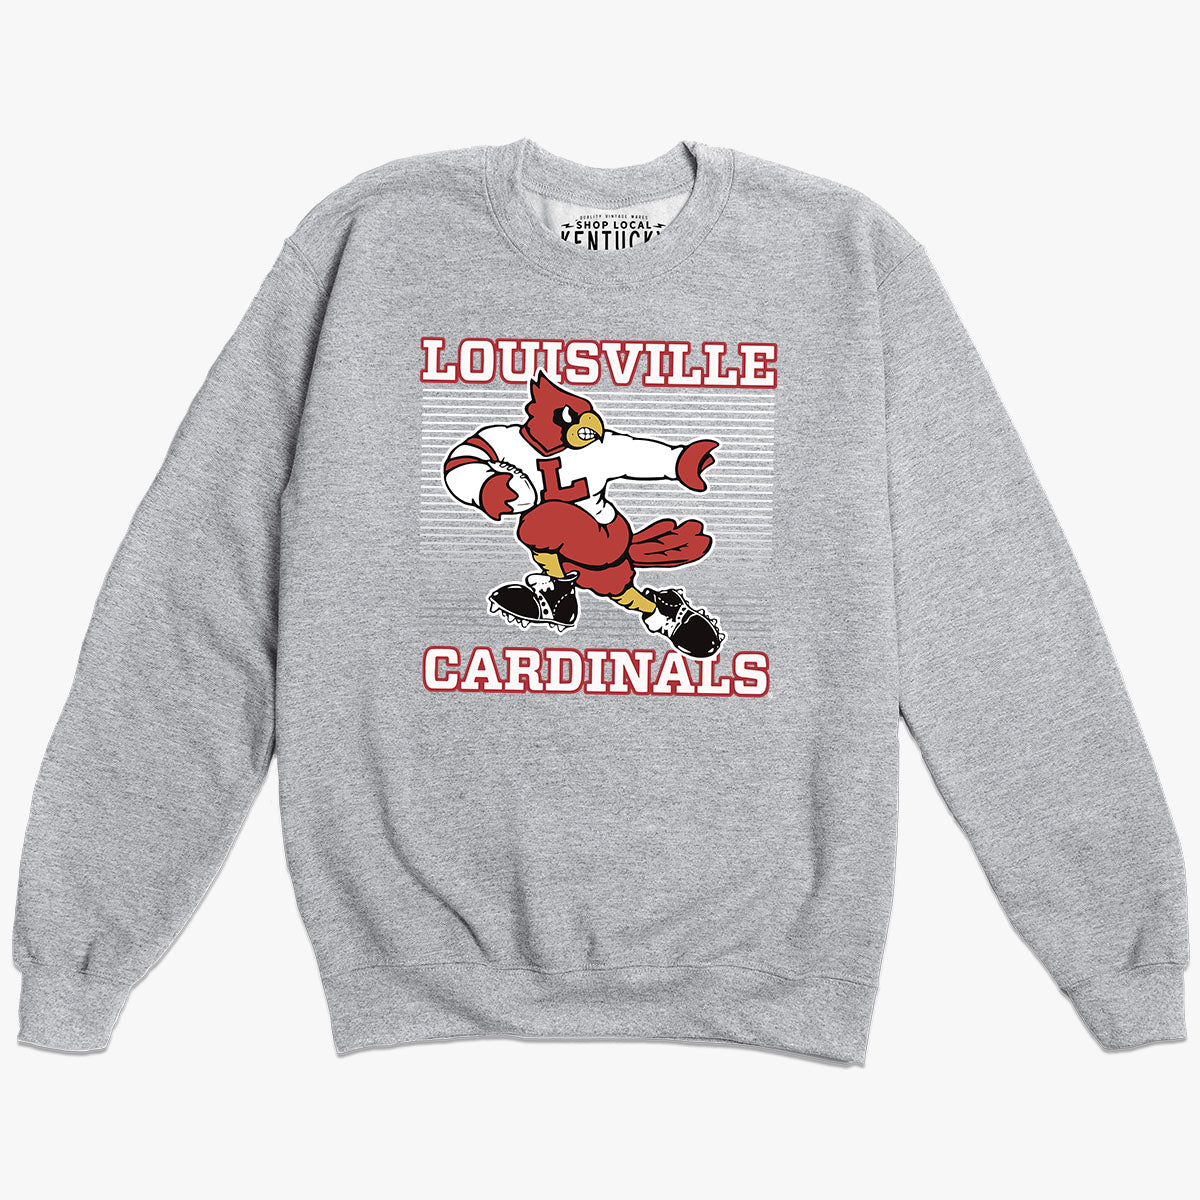 Louisville Sweatshirt